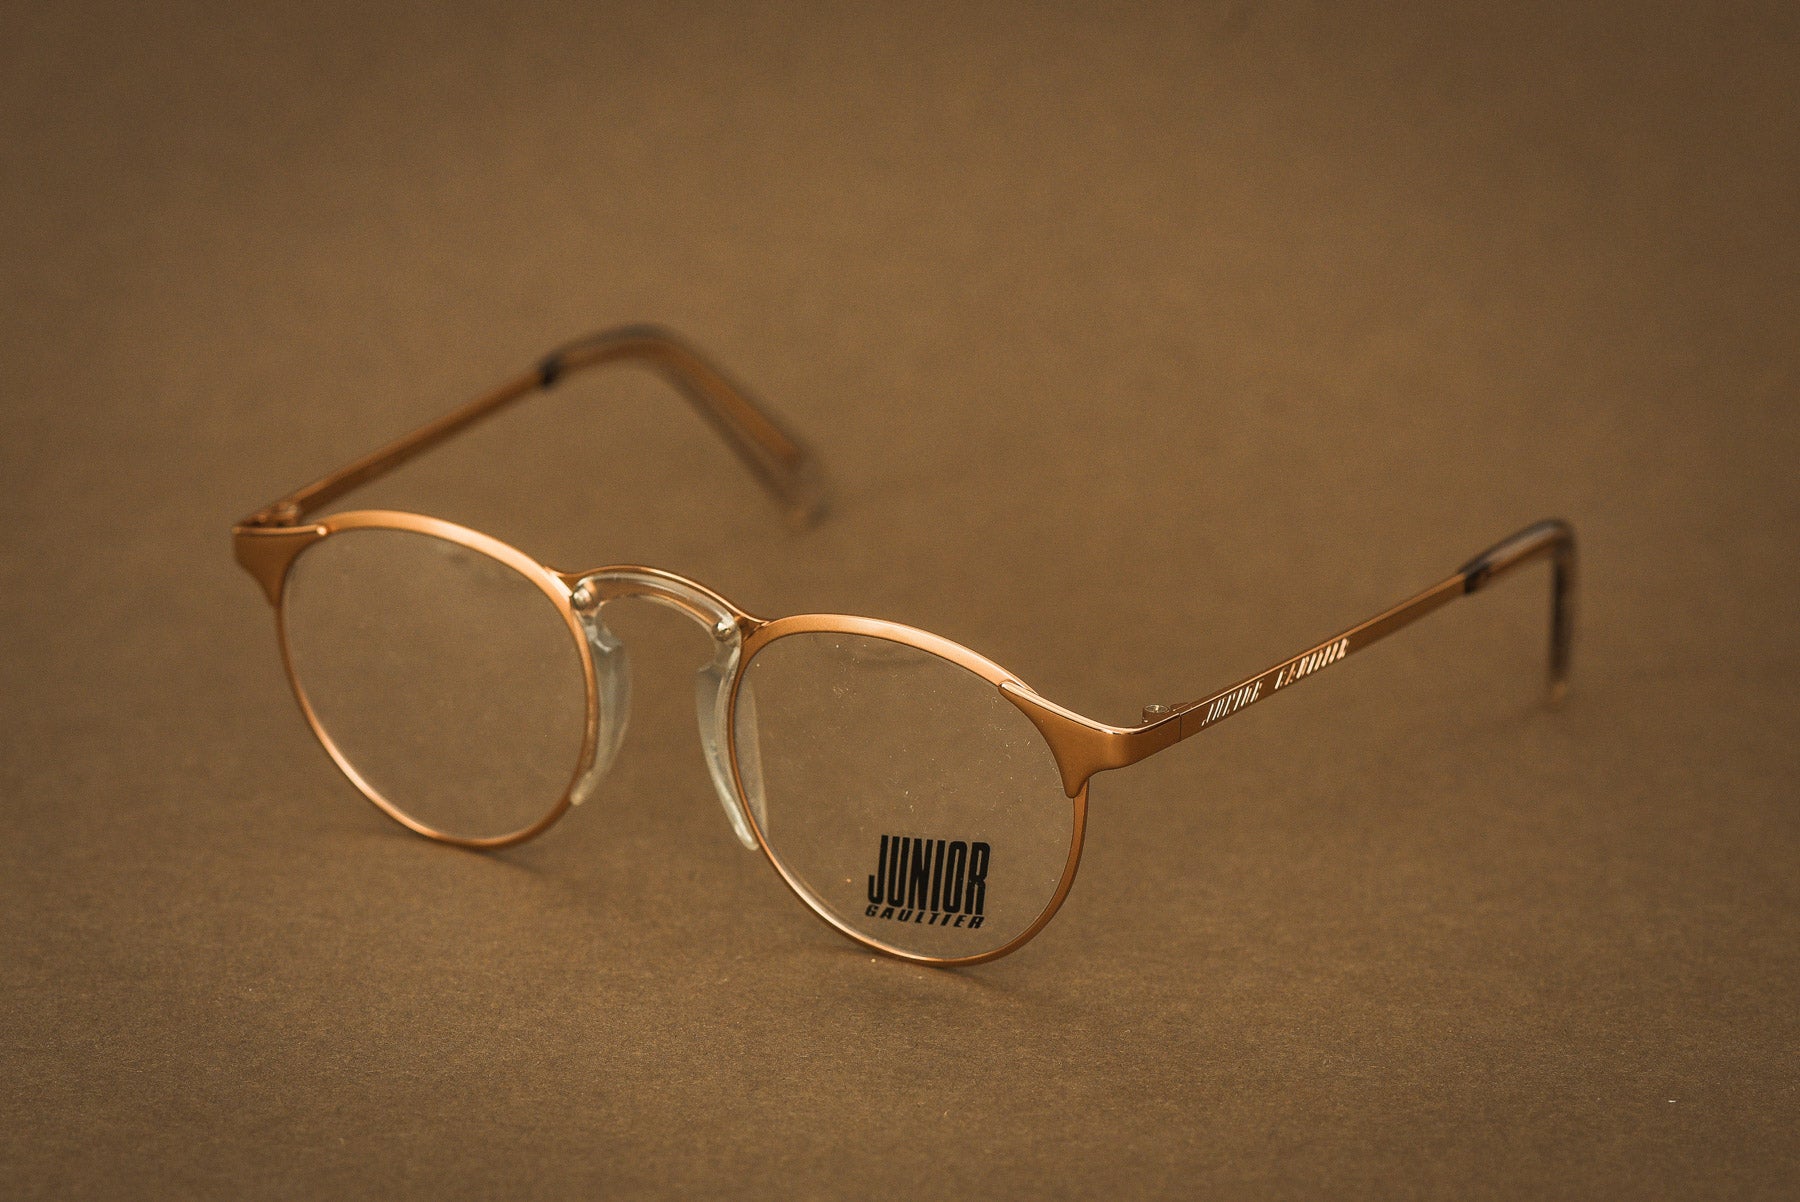 Jean Paul Gaultier Junior 57-0174 glasses